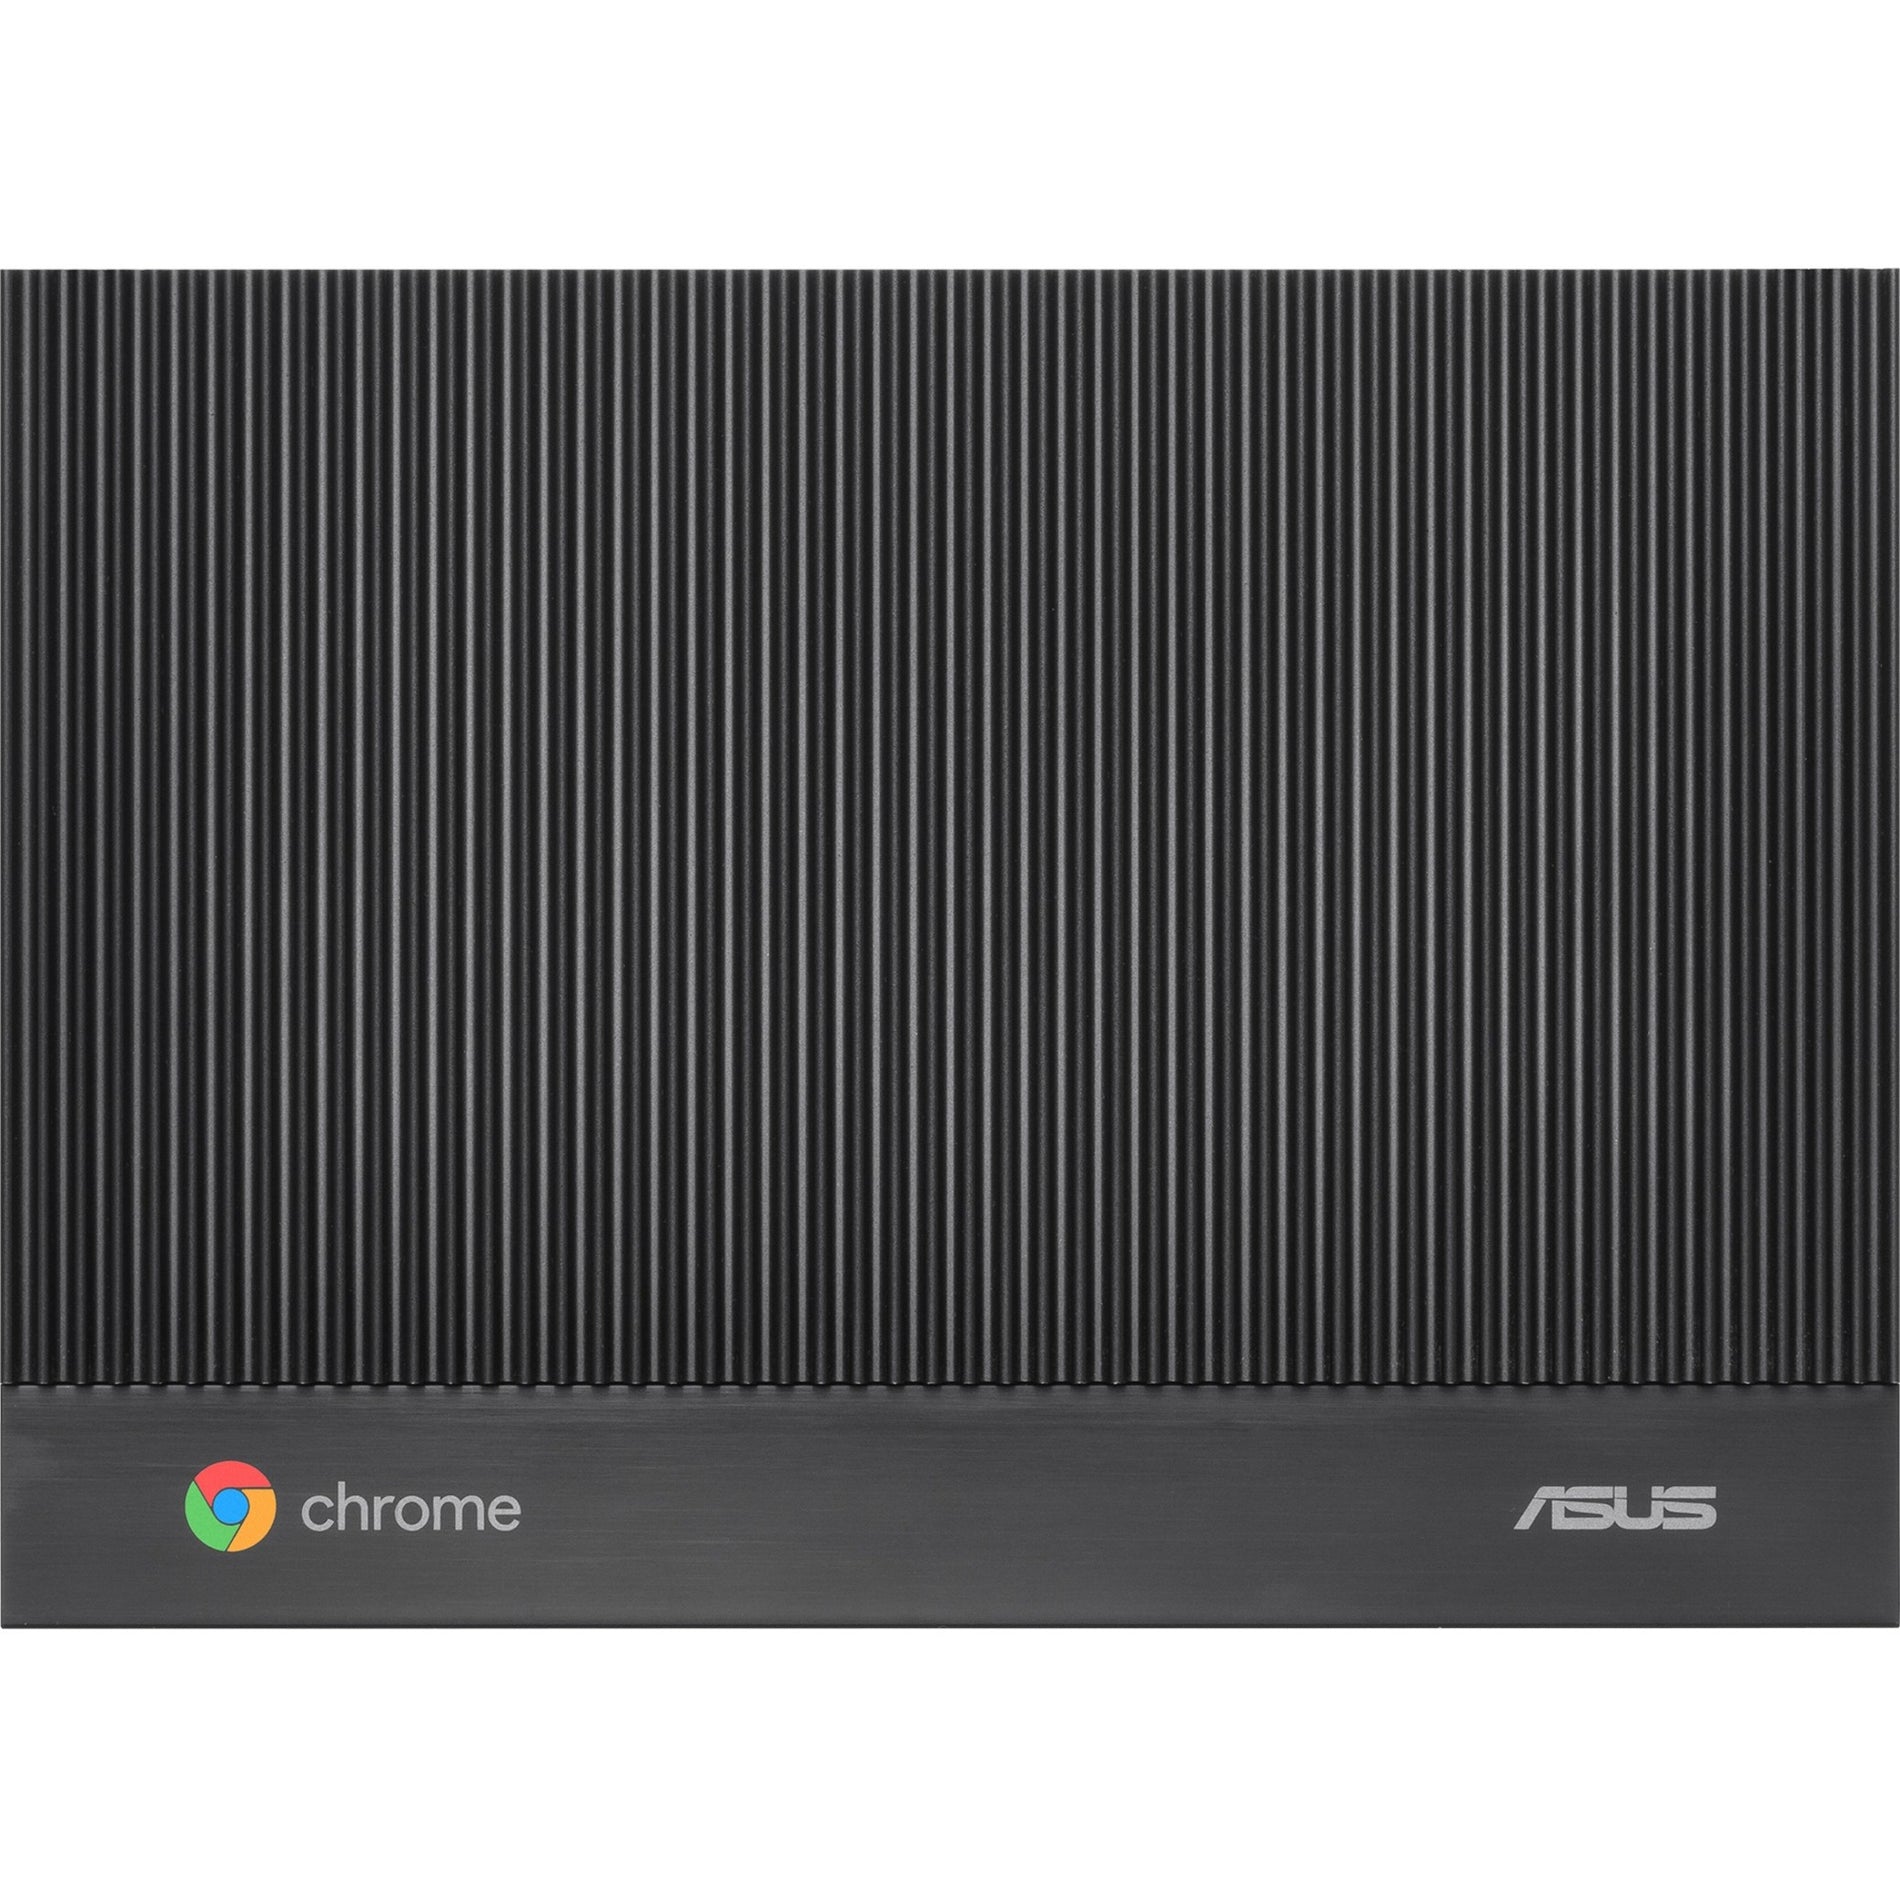 Asus CHROMEBOX4-FC017U Chromebox, Intel Celeron 5205U 1.90 GHz, 4GB RAM, 32GB Flash Memory, Gun Metal